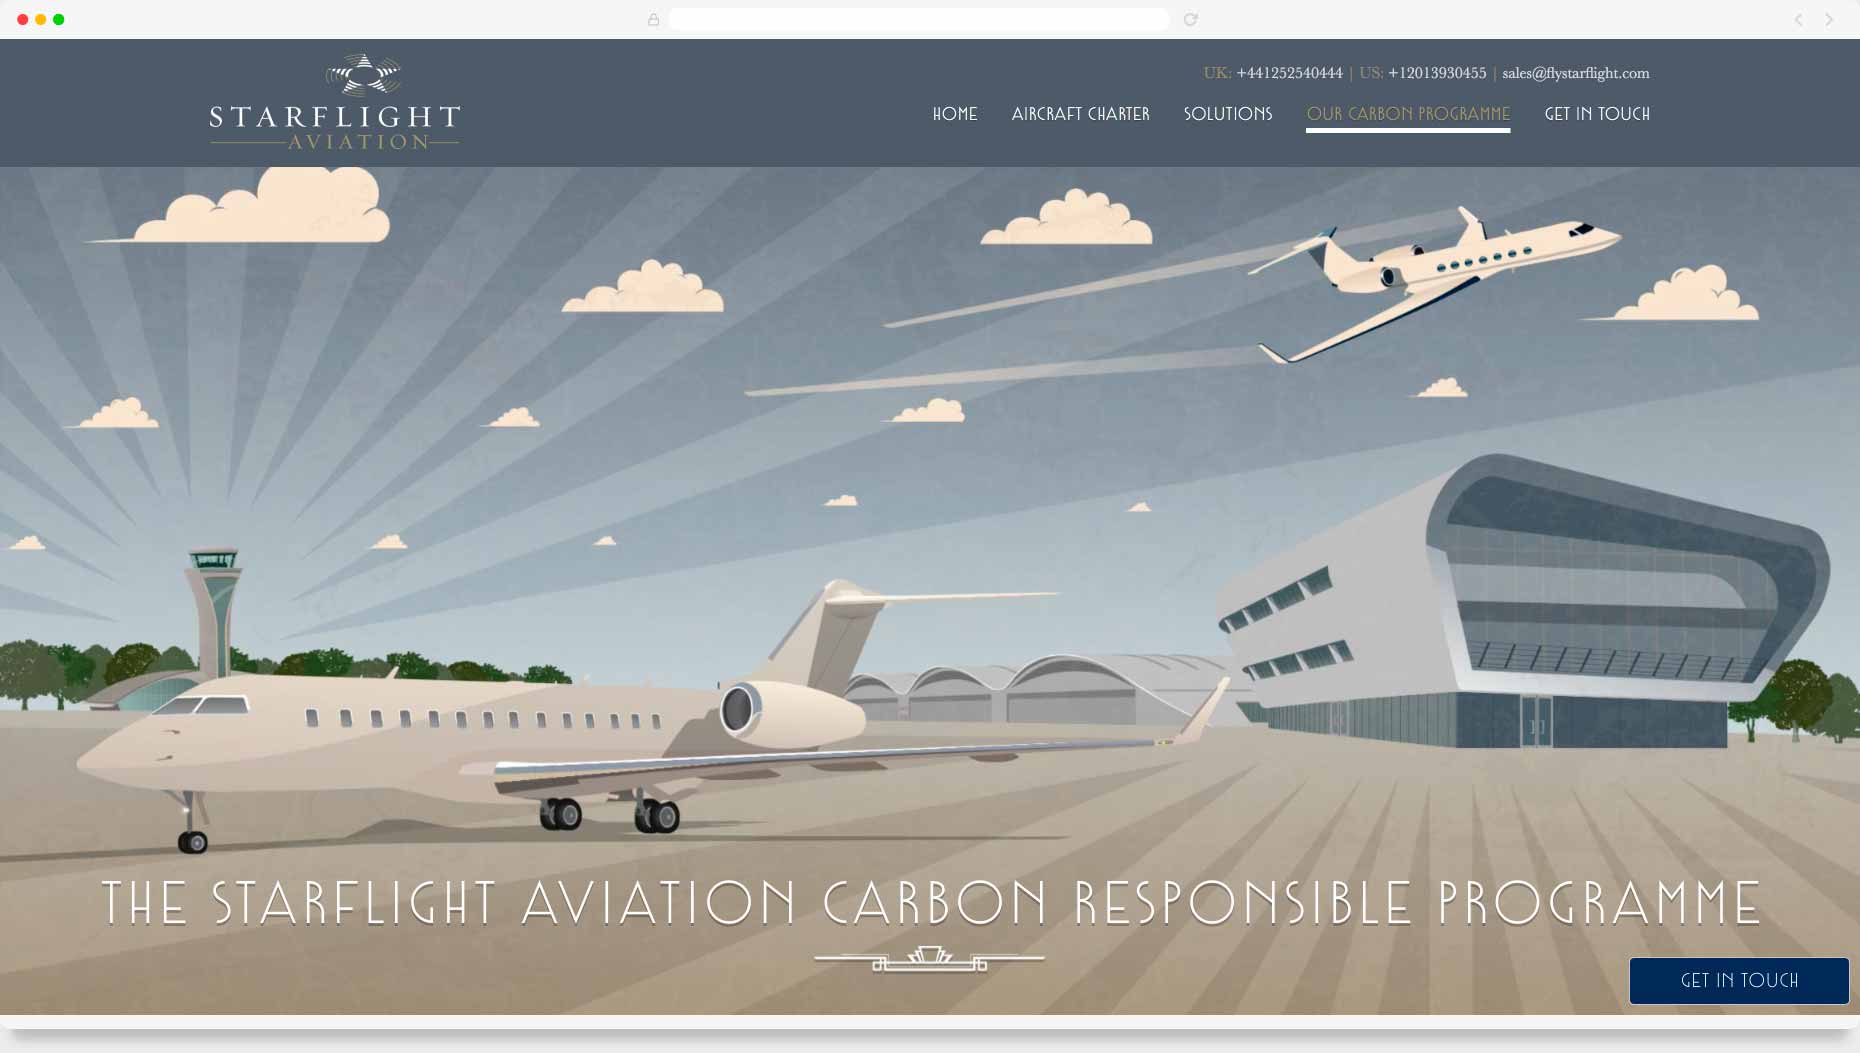 Website Design & Development - Starflight Aviation, Hampshire